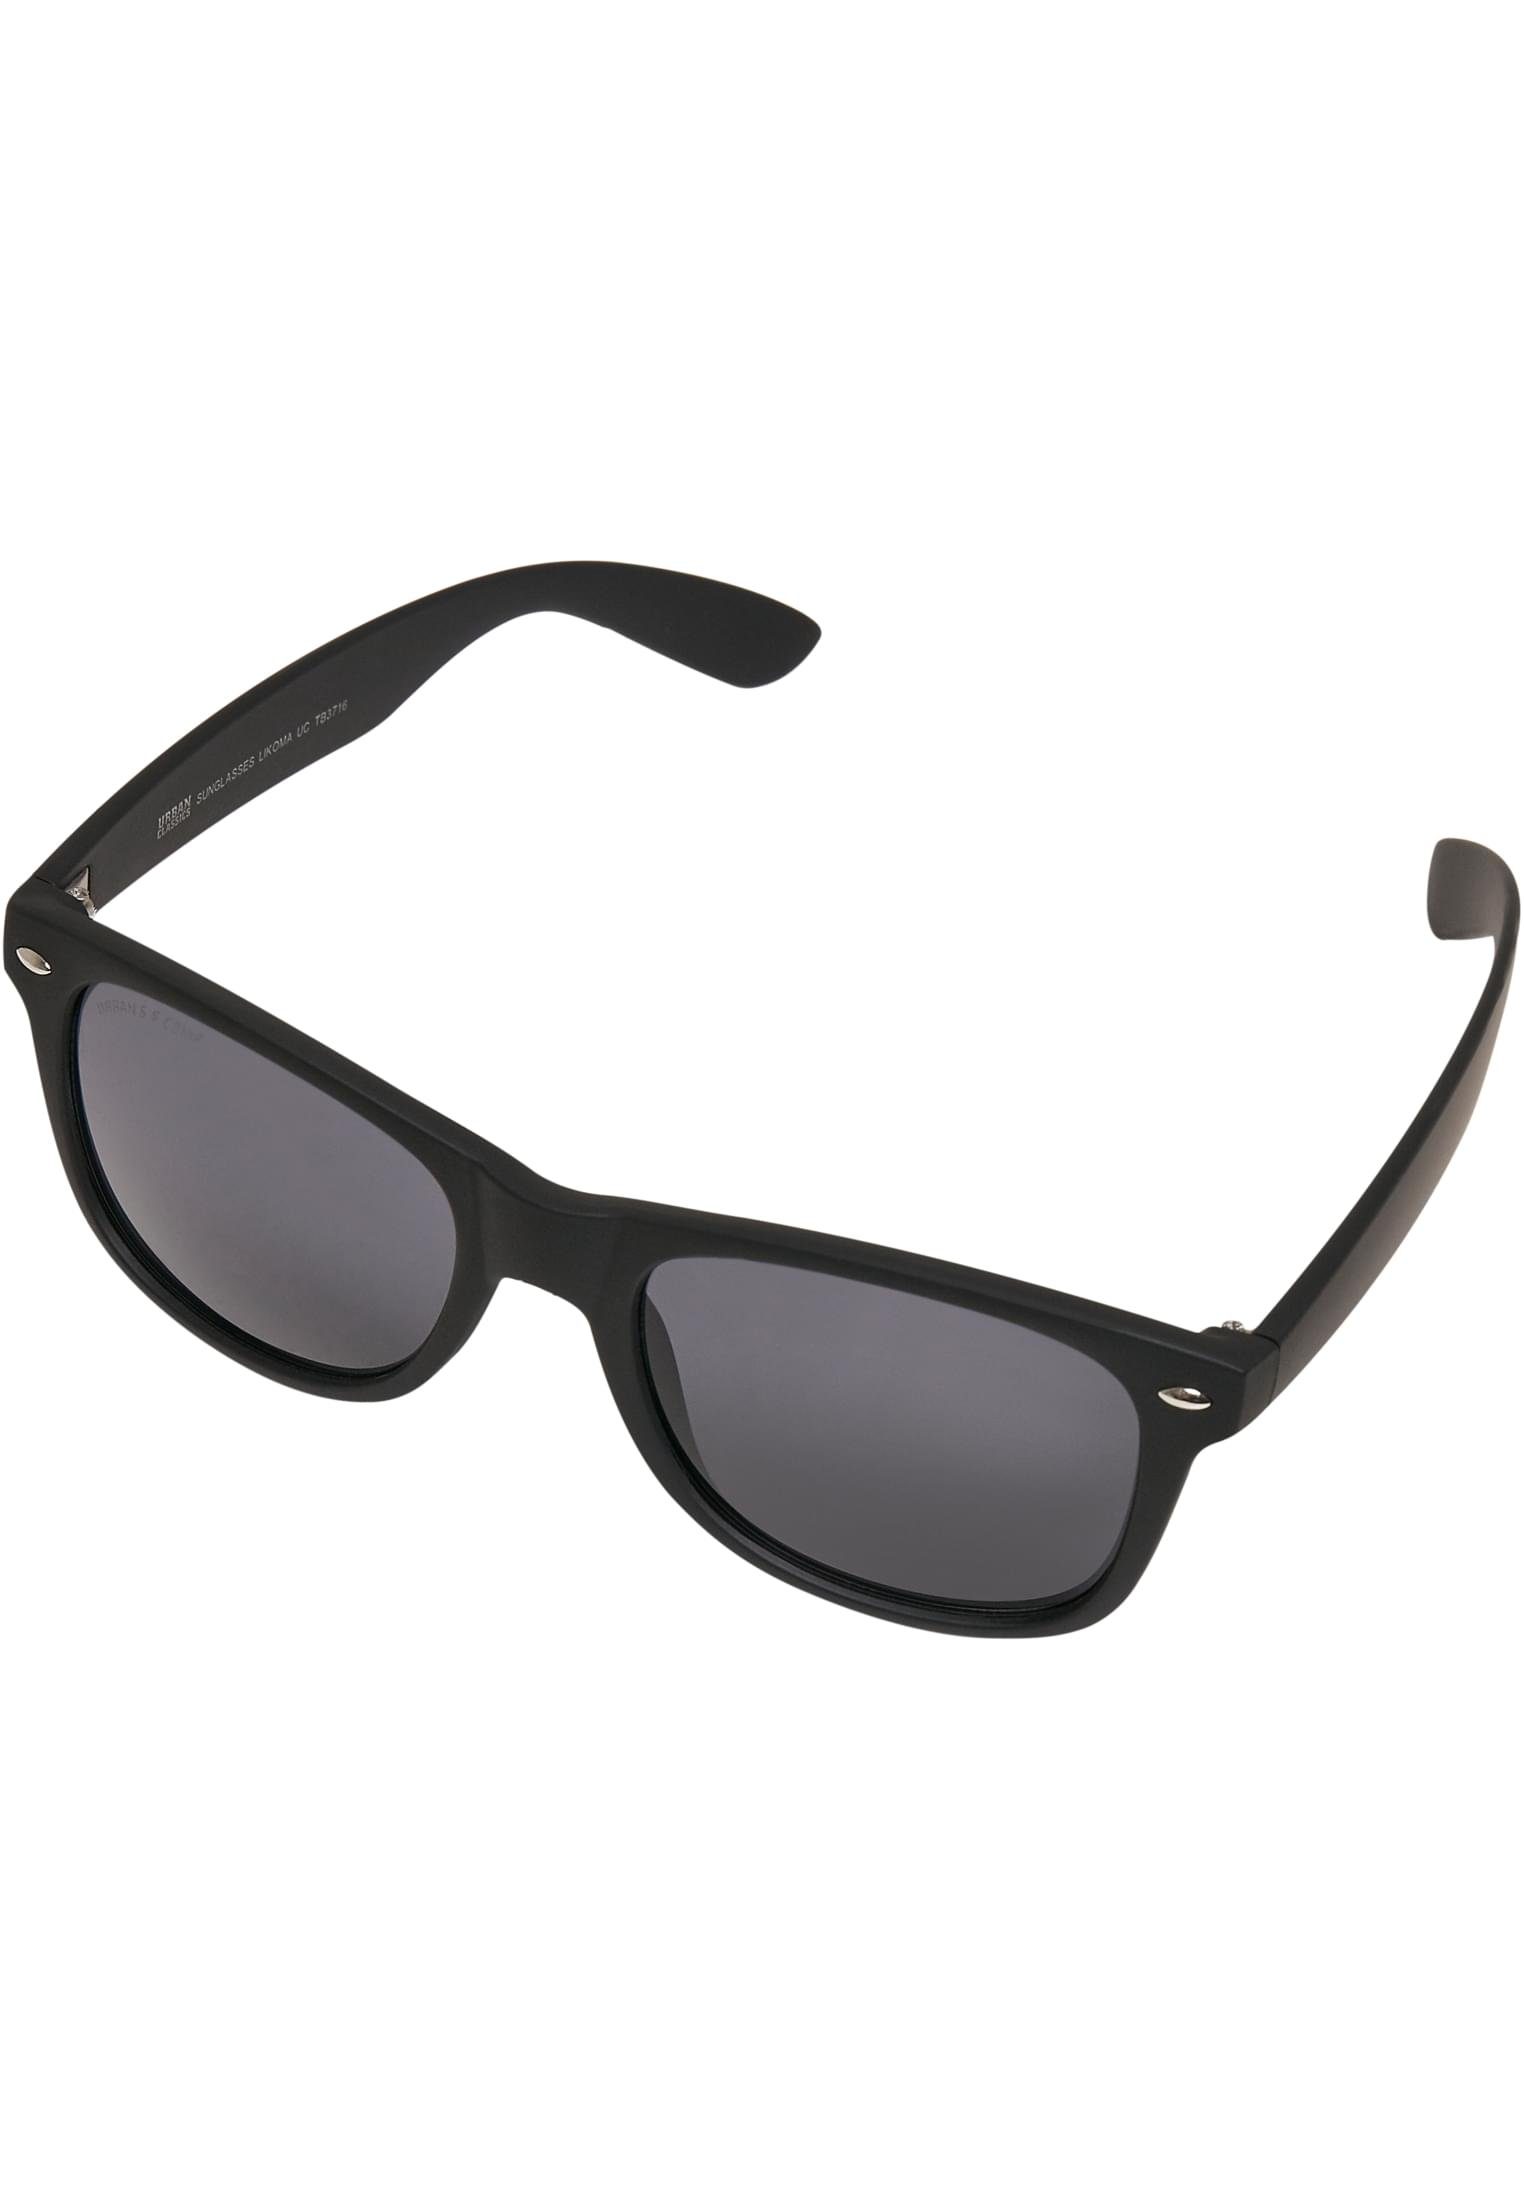 UC Sonnenbrille Accessoires Sunglasses black Likoma CLASSICS URBAN